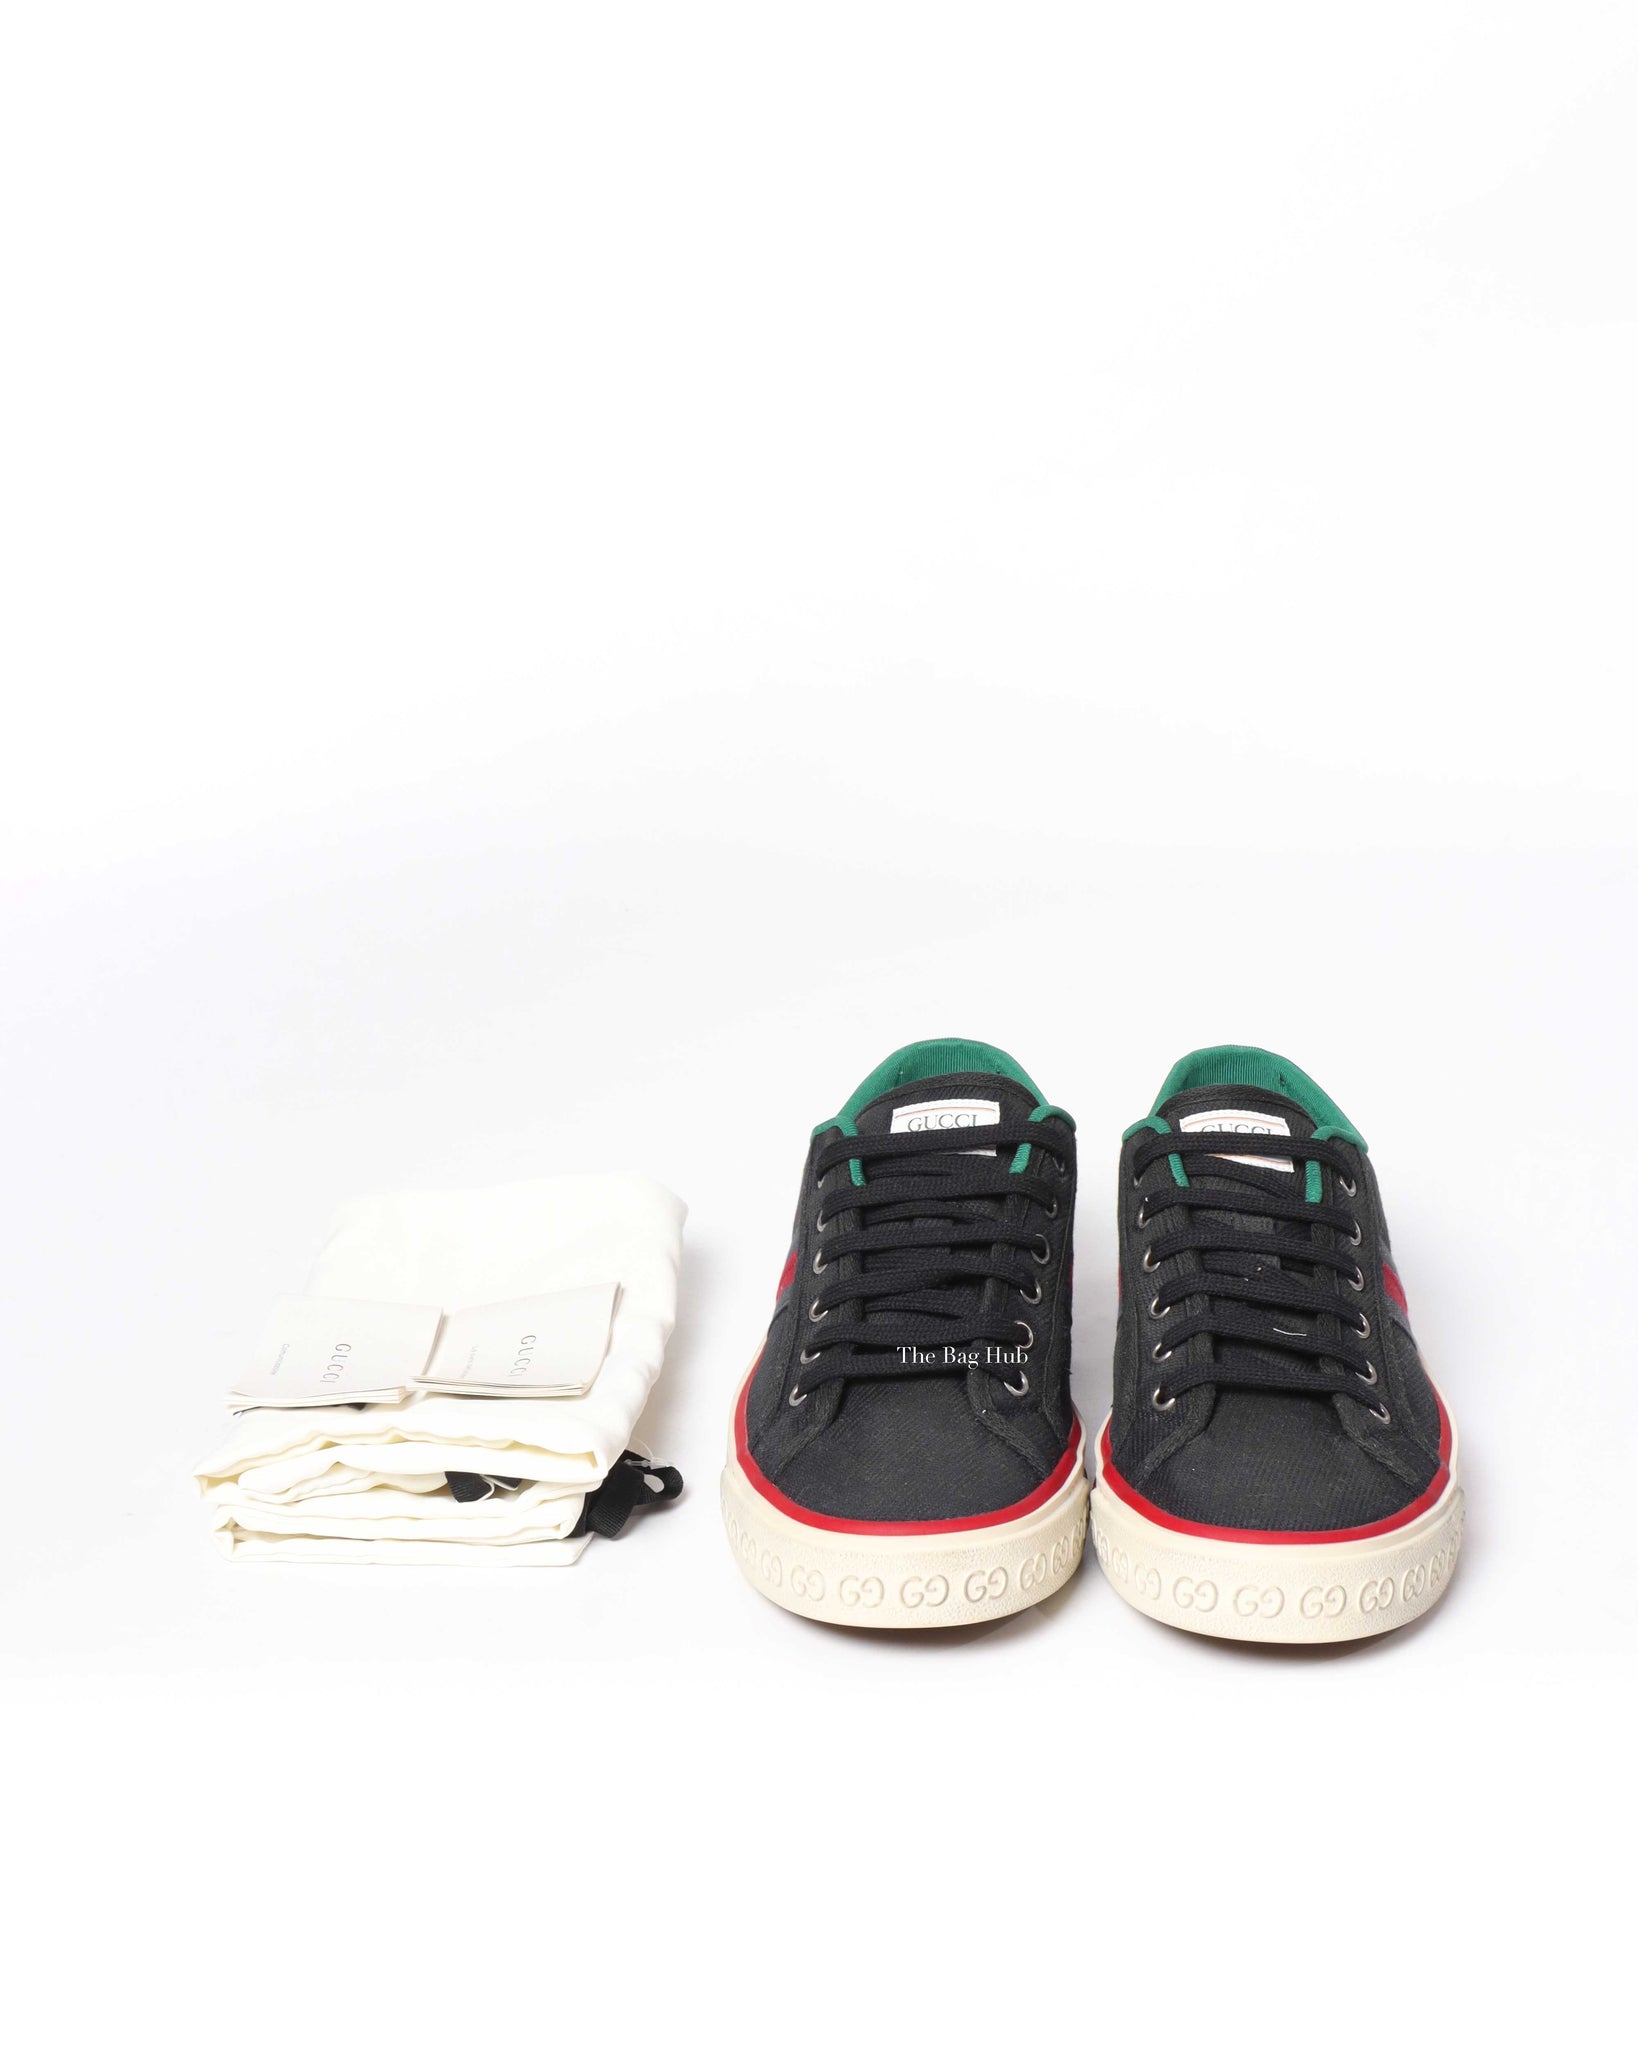 Gucci Black Web Canvas Men's Tennis Sneakers Size 38.5-9